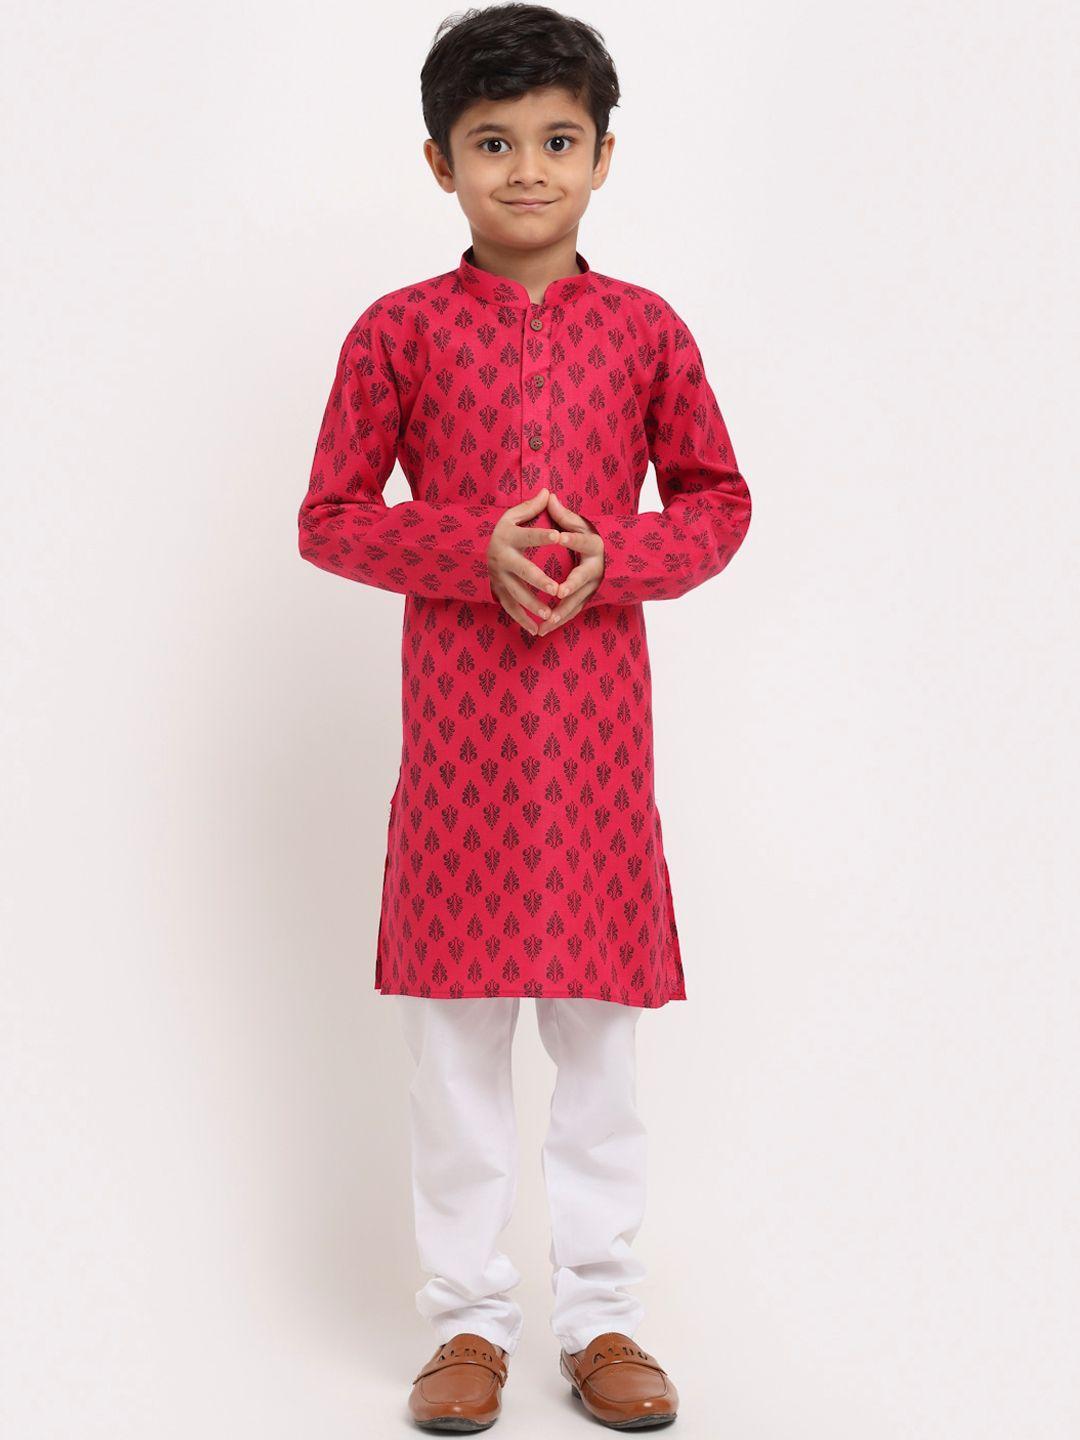 kraft india boys pink ethnic motifs printed regular pure cotton kurta with pyjamas